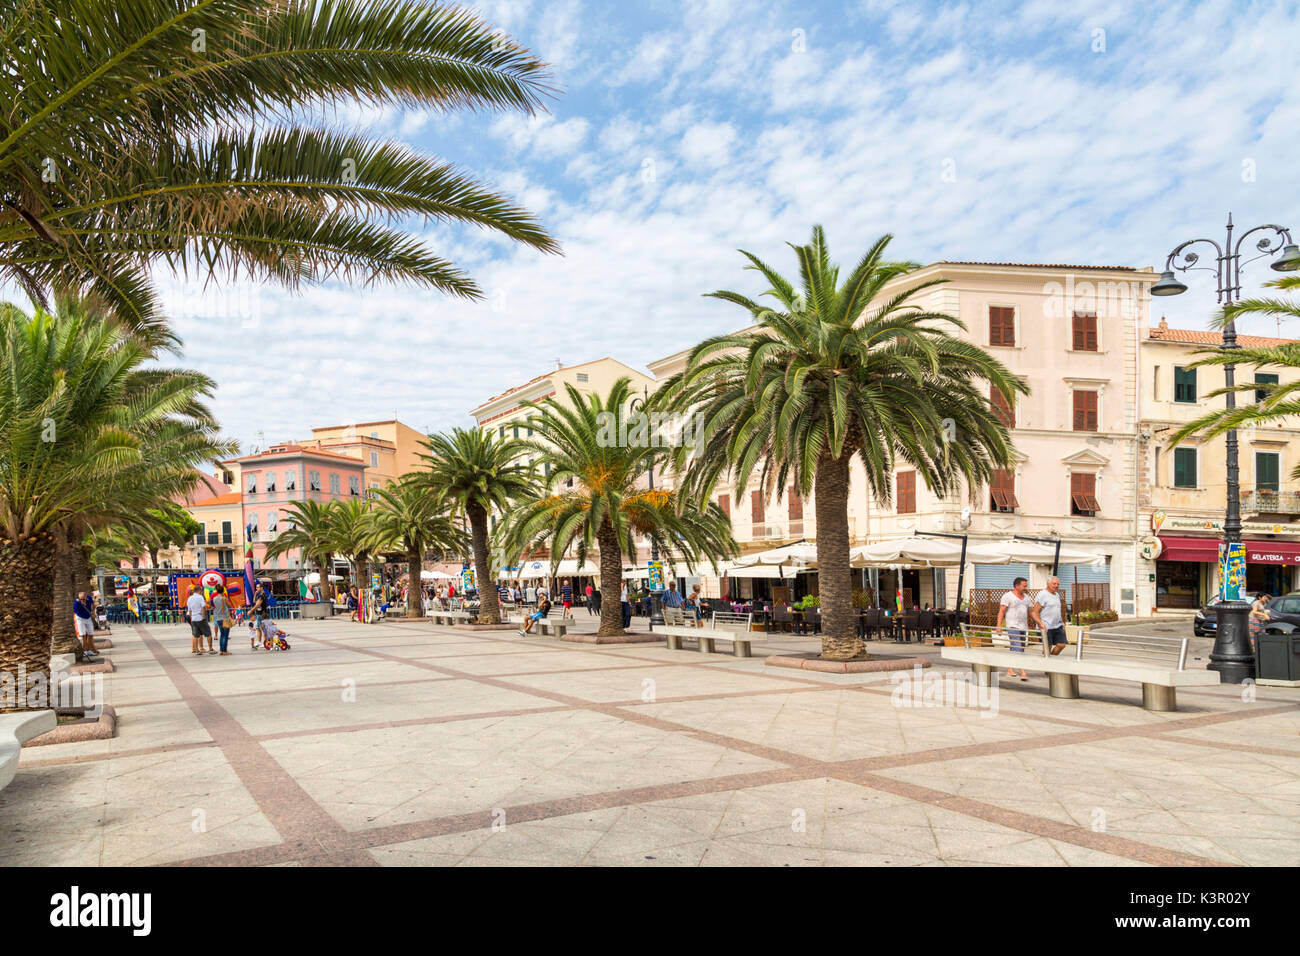 Die Promenade, umrahmt von Palmen Bäume Caprera La Maddalena Insel Sardinien Italien Europa Stockfoto